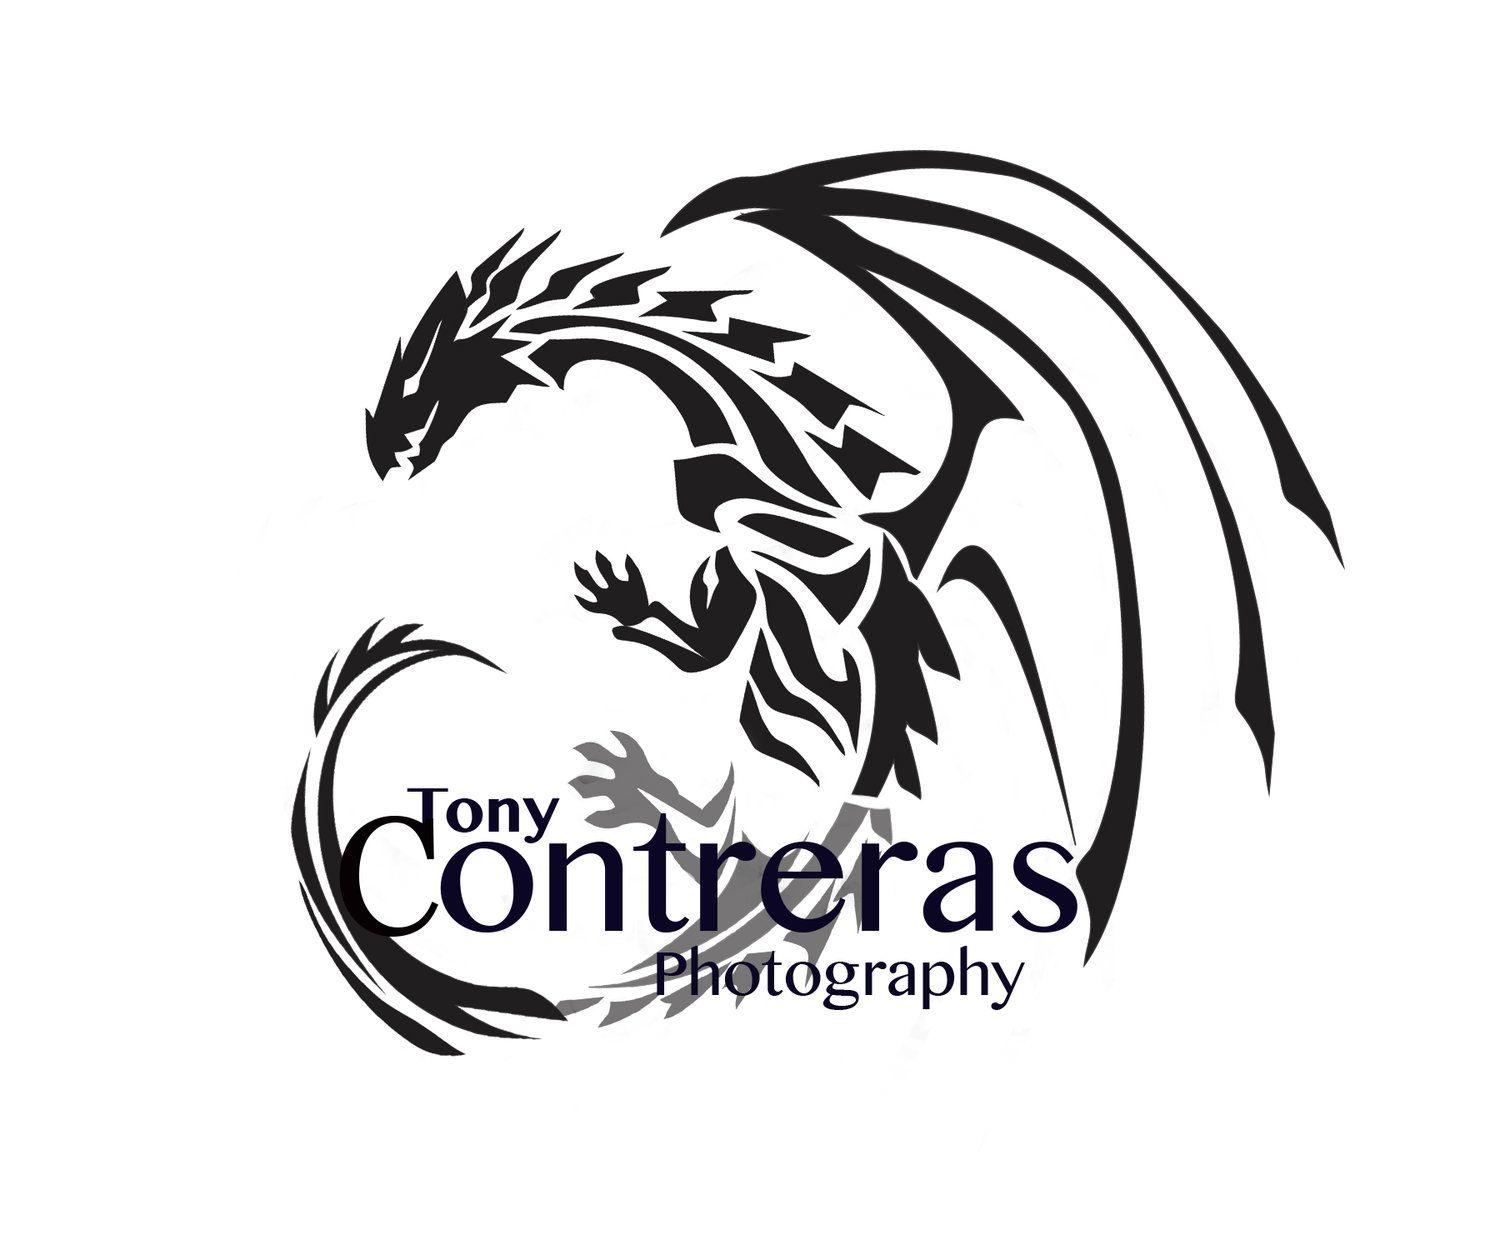 Contreras Logo - Tony Contreras Photography